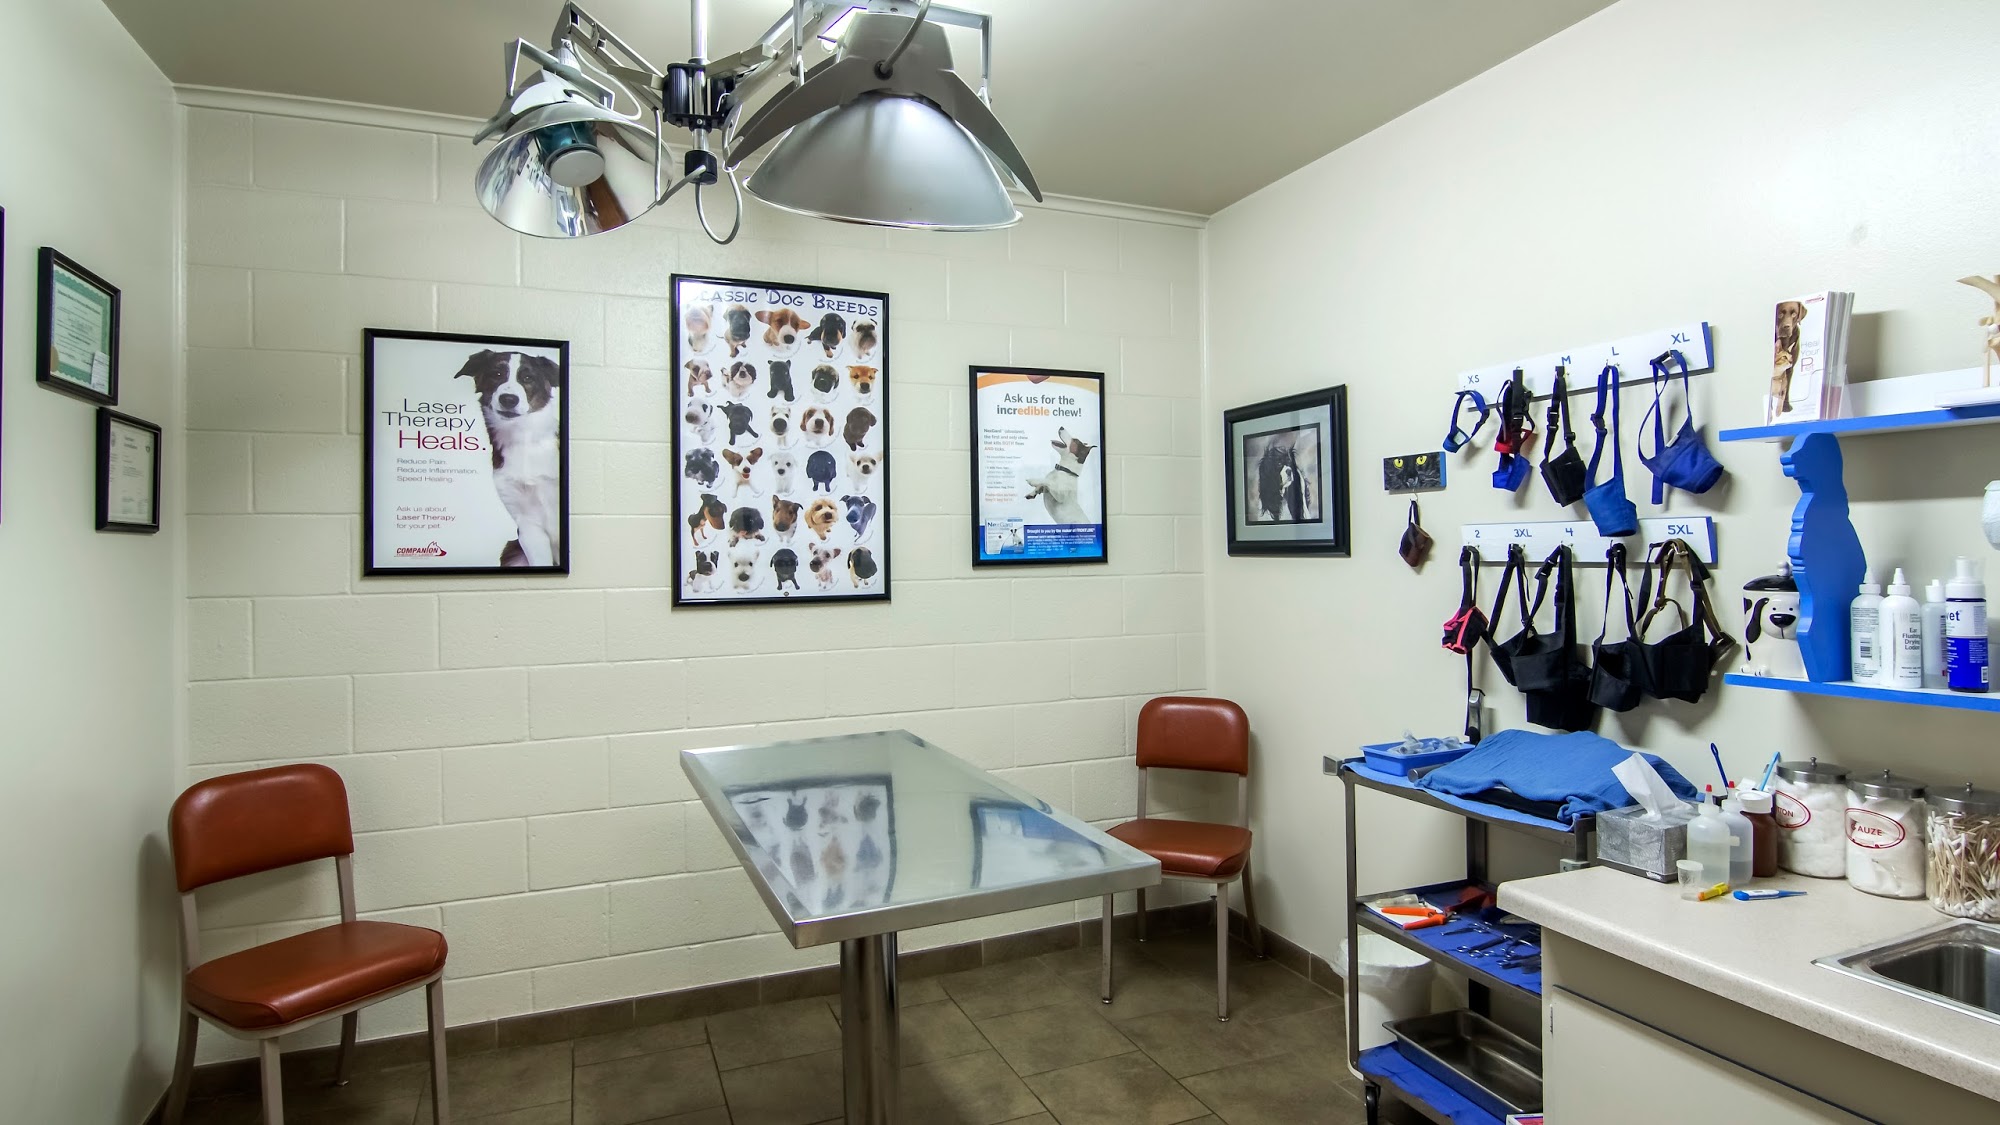 Little Rock Veterinary Clinic